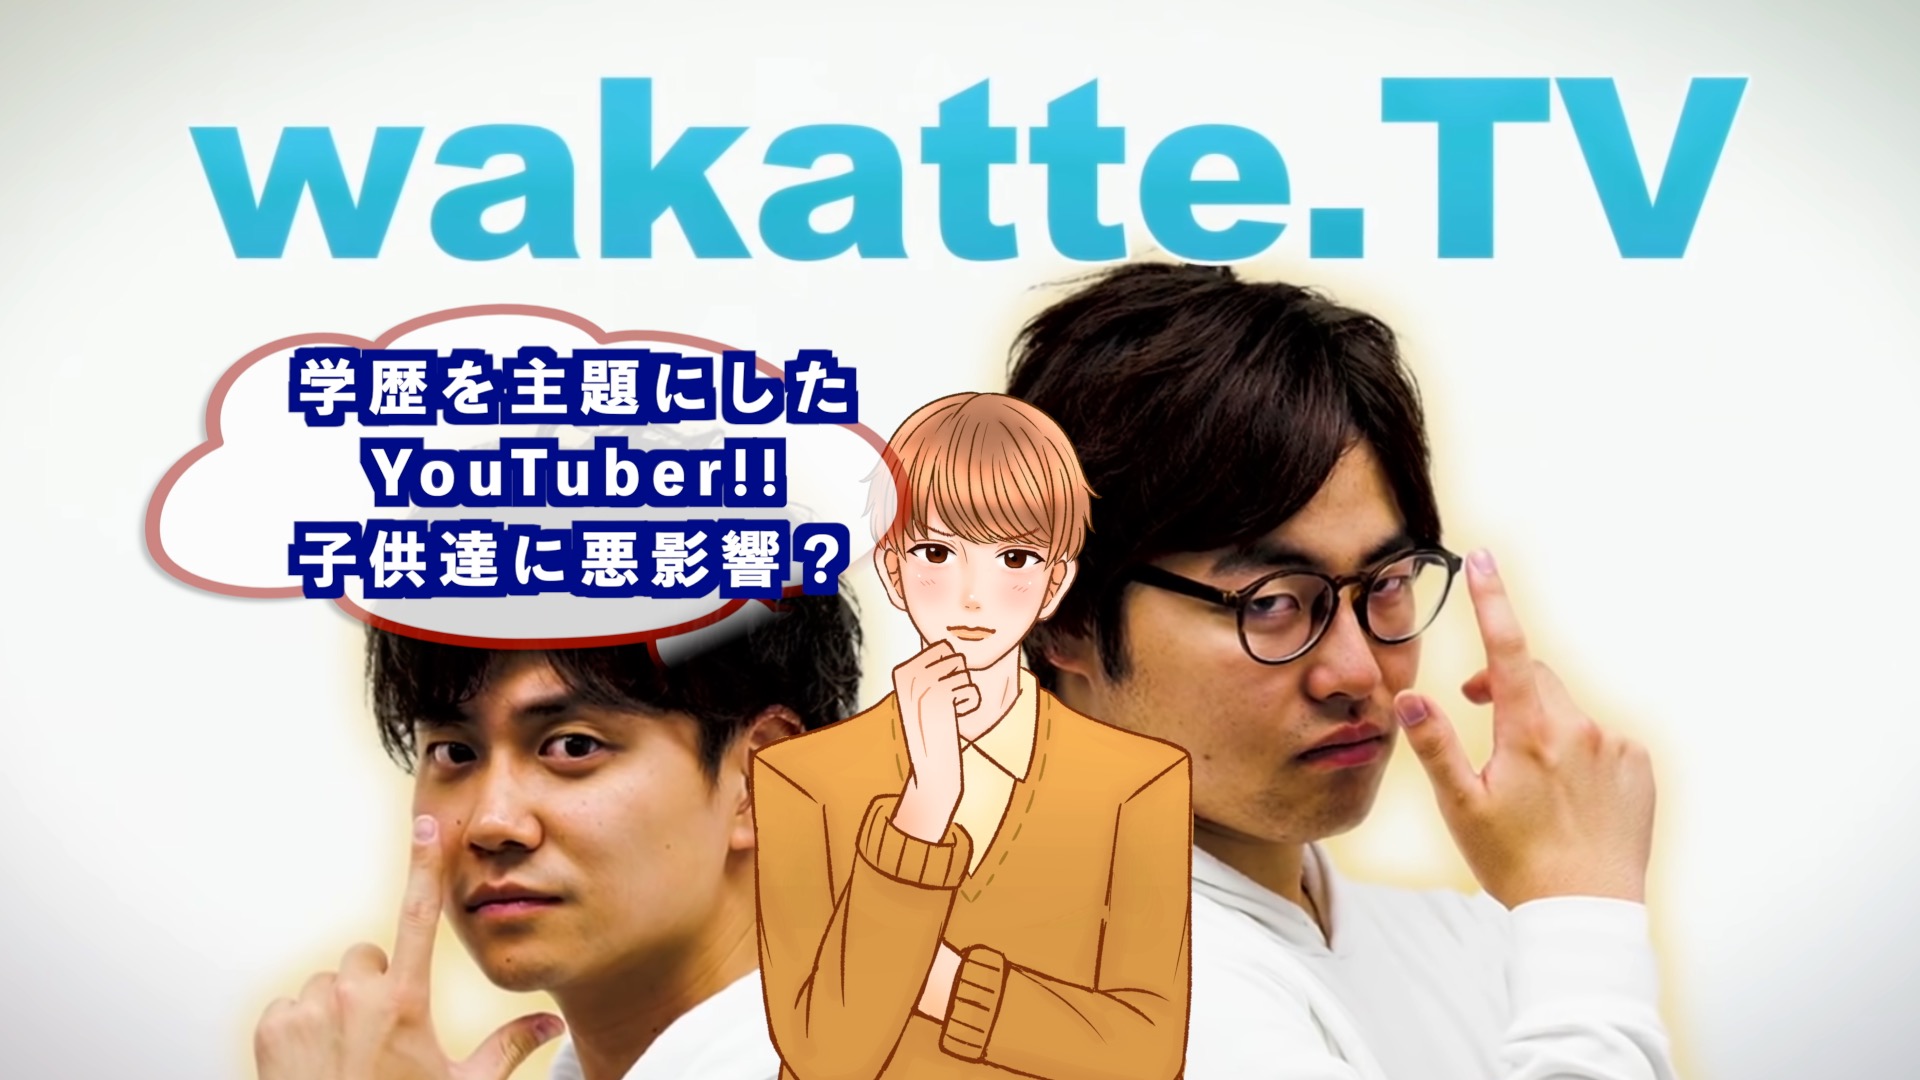 「wakatte.TV」のアイキャッチ画像